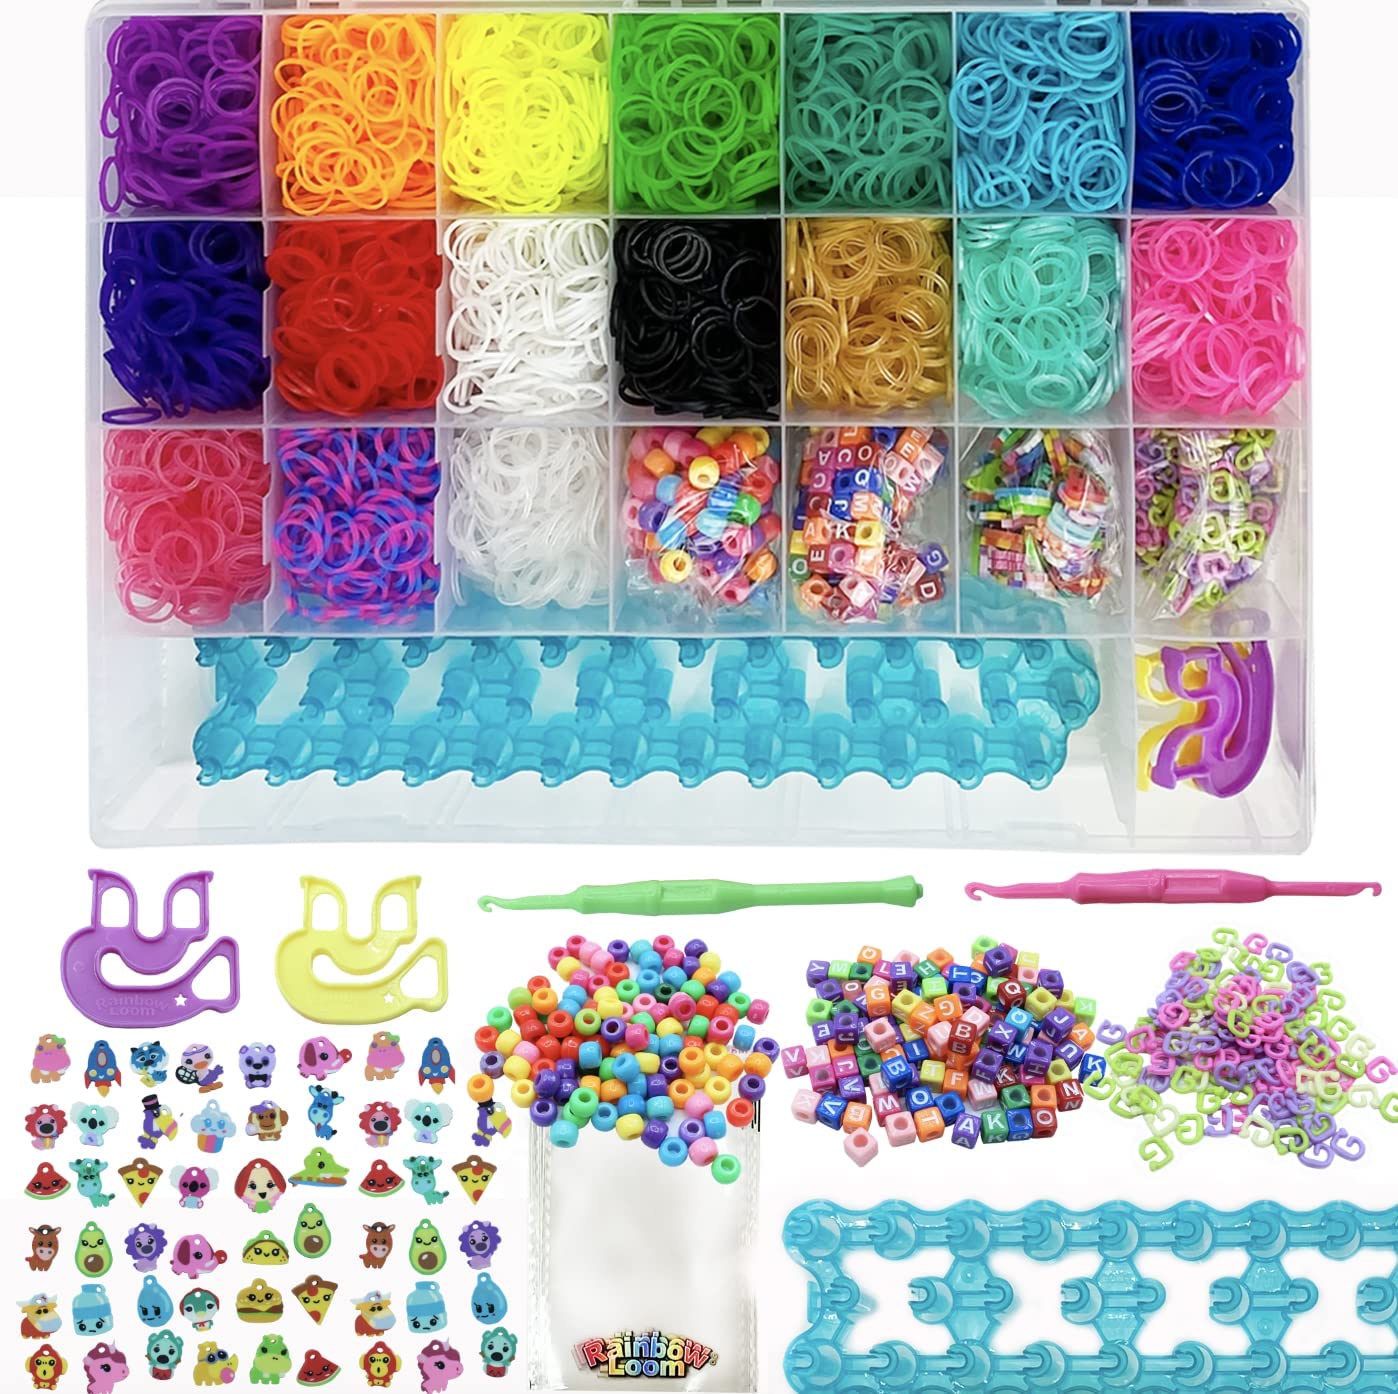 Rainbow Loom Mega Combo Set Loomi Pals Sticker Pendants Bracelet Making Kit  review｜TikTok Search